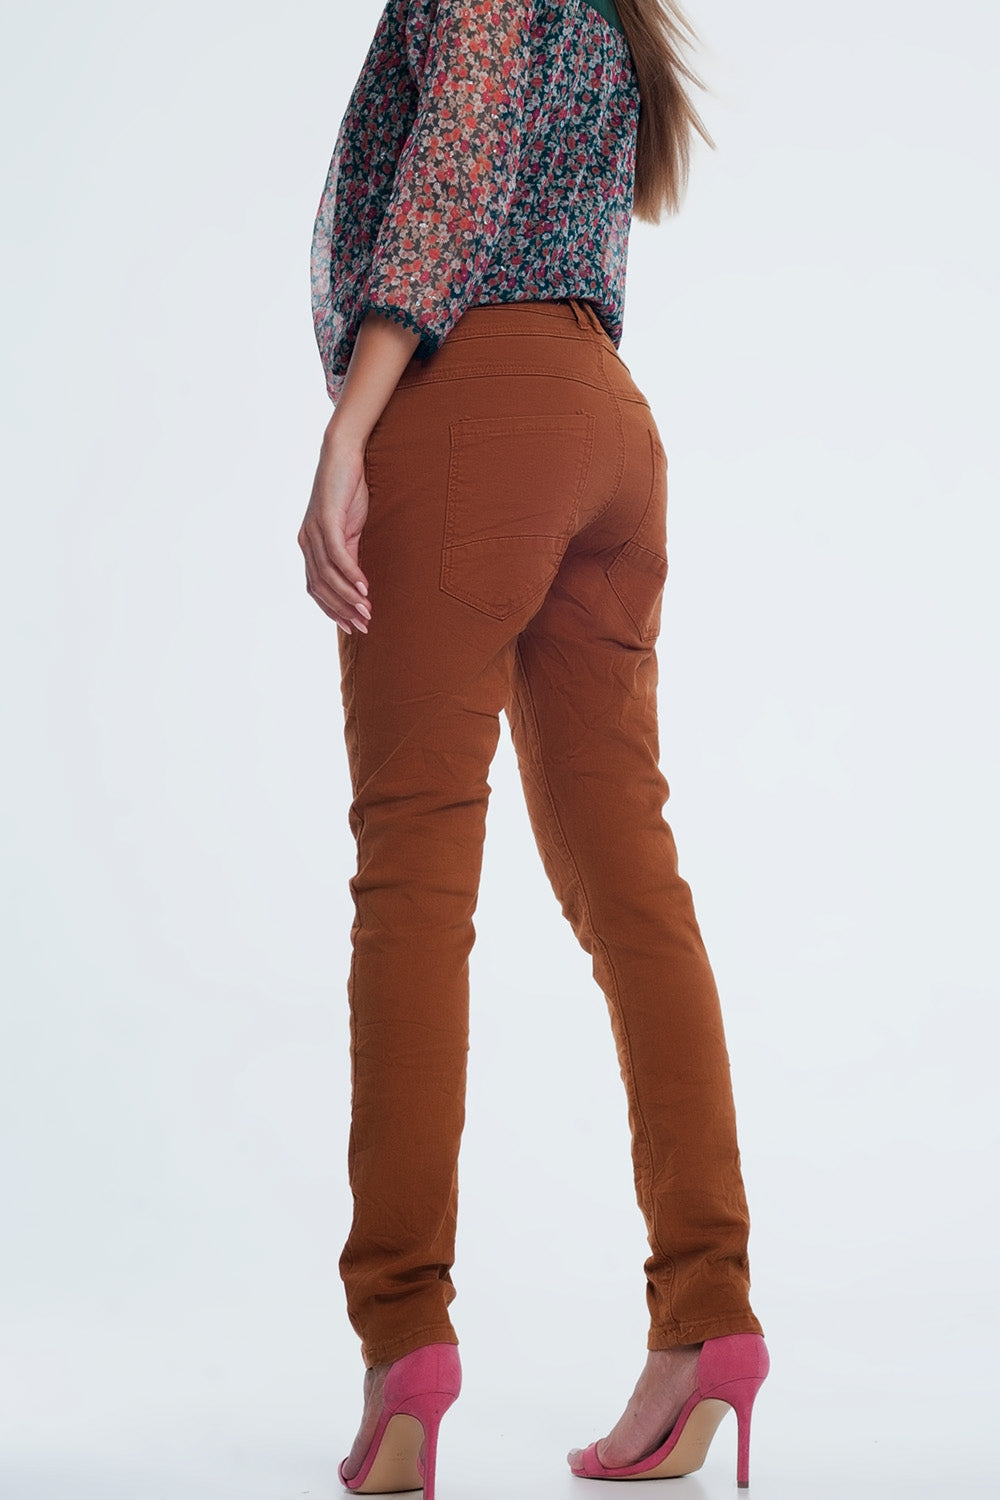 Drop crotch skinny jean in OrangeJeans